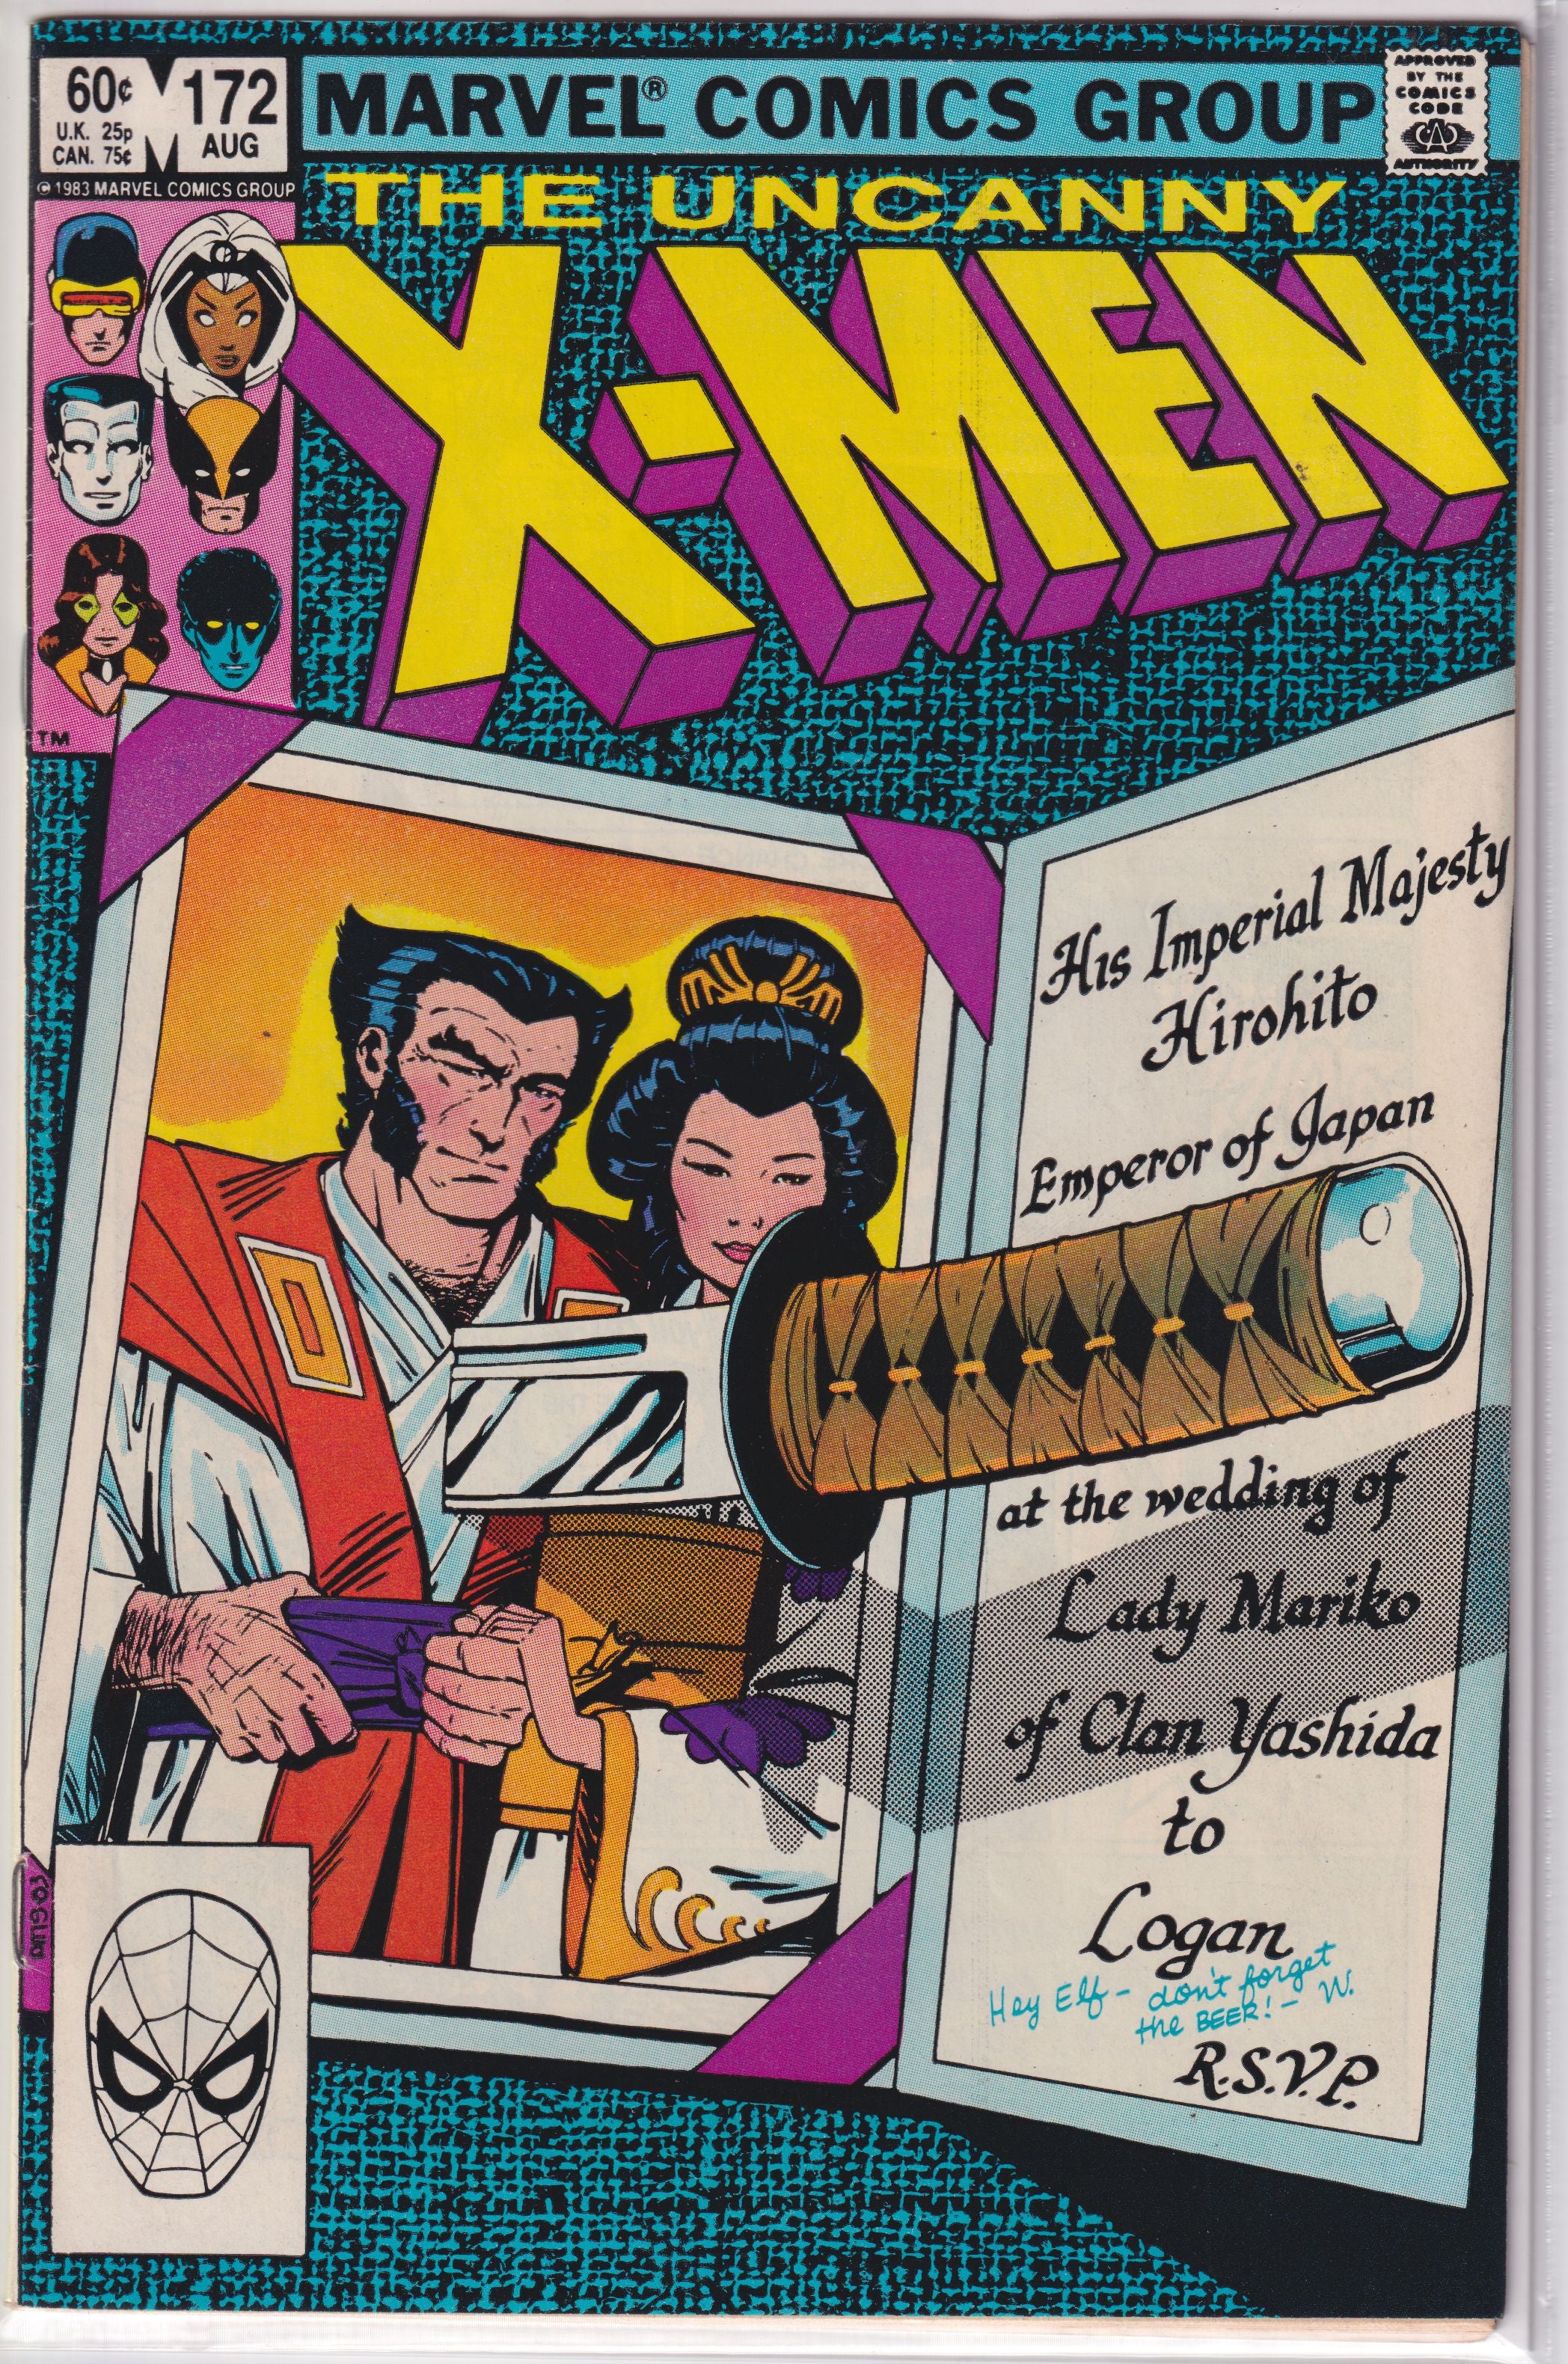 UNCANNY X-MEN (1981) #172 FN+